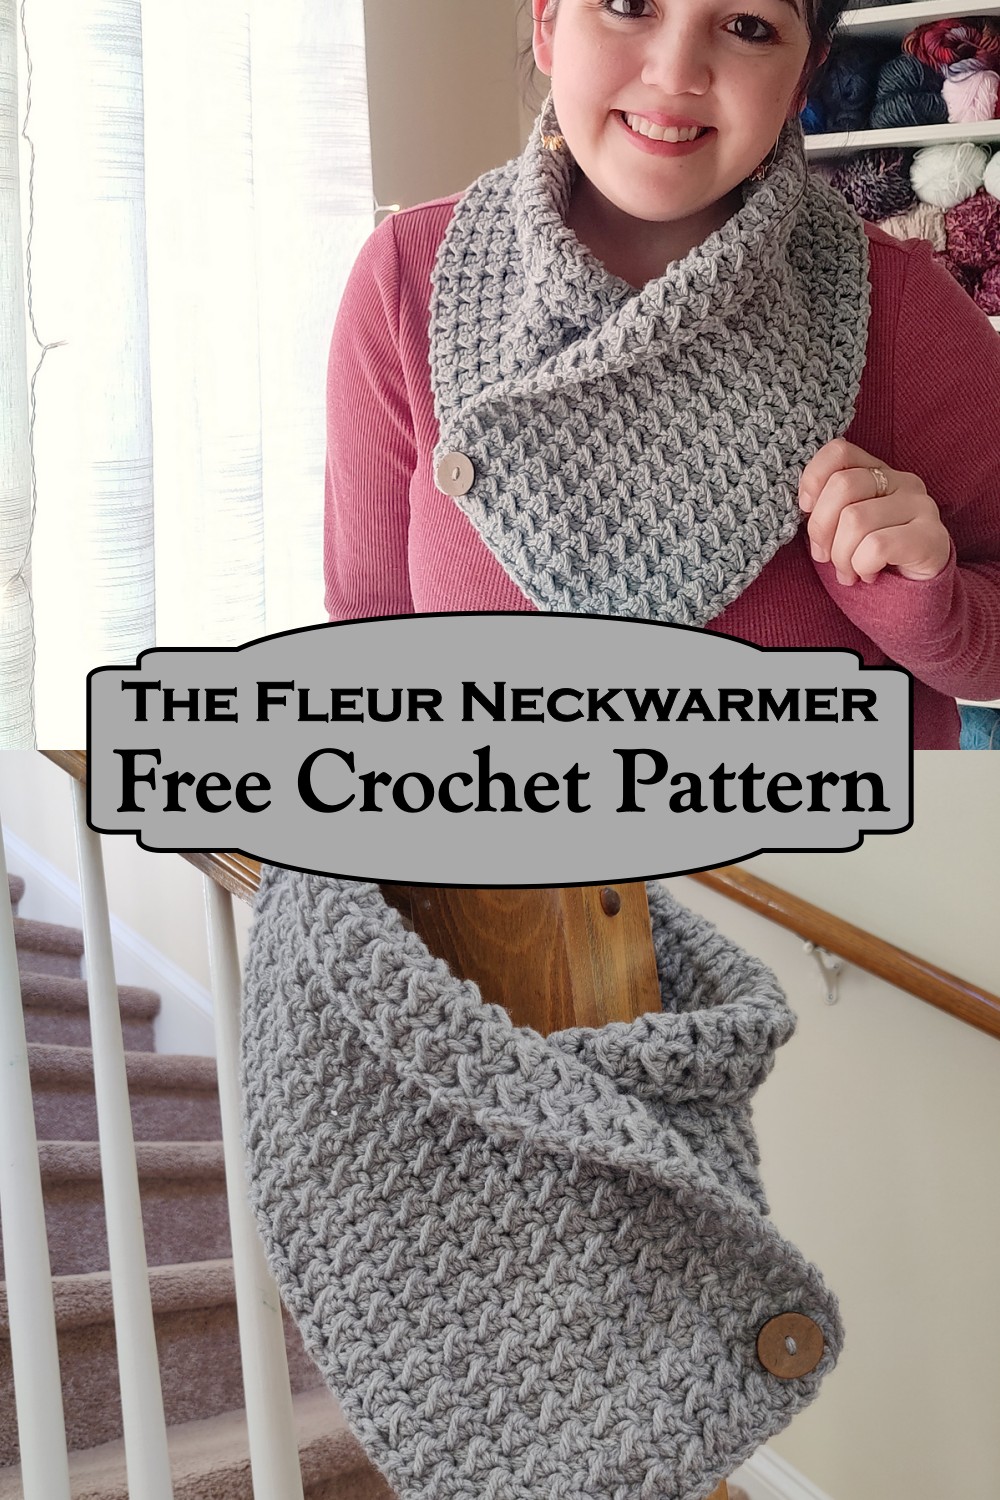 The Fleur Neckwarmer